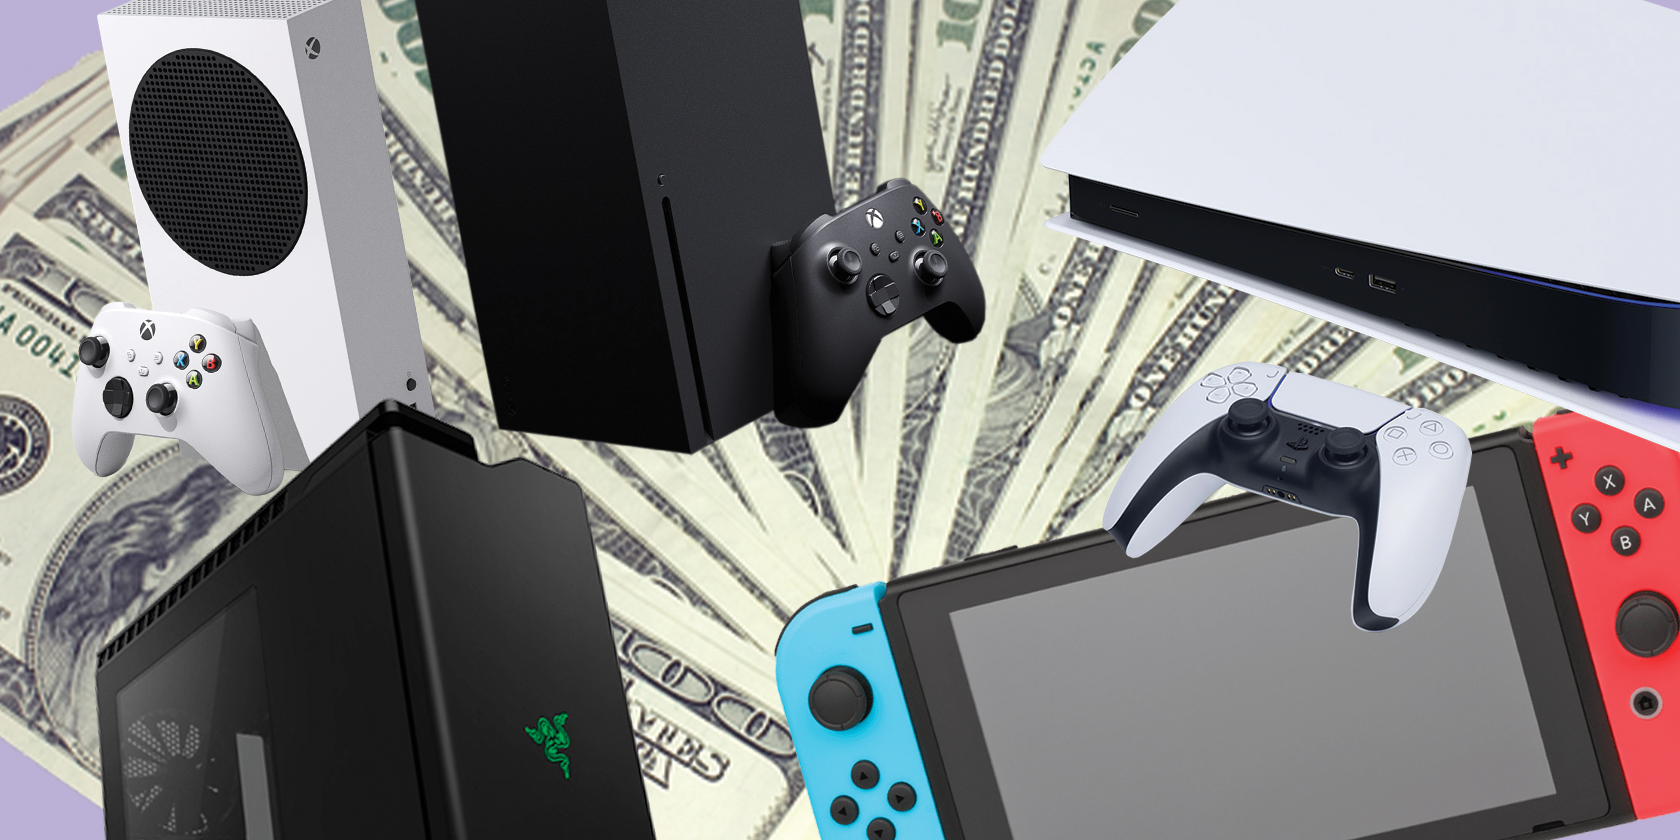 consoles and PCs and US dollar bills